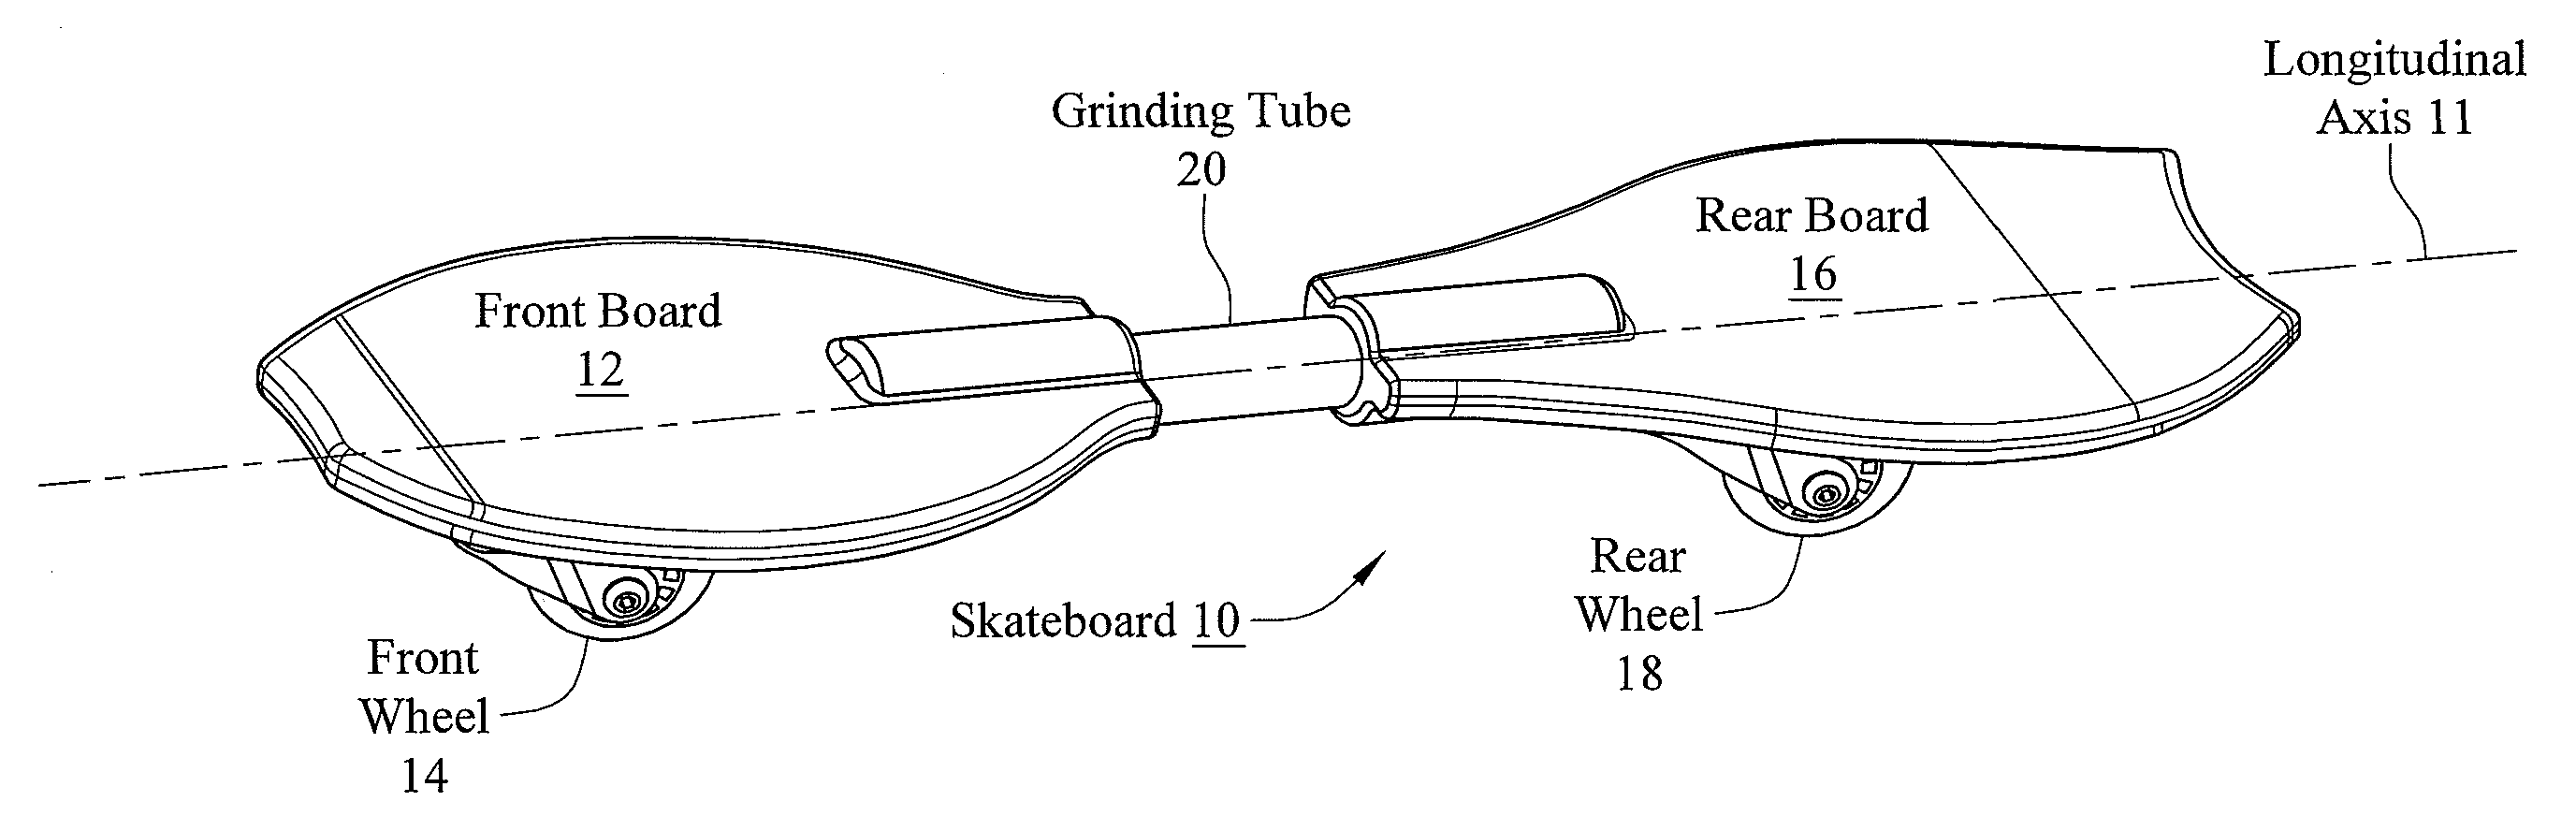 Flexible skateboard with grinding tube